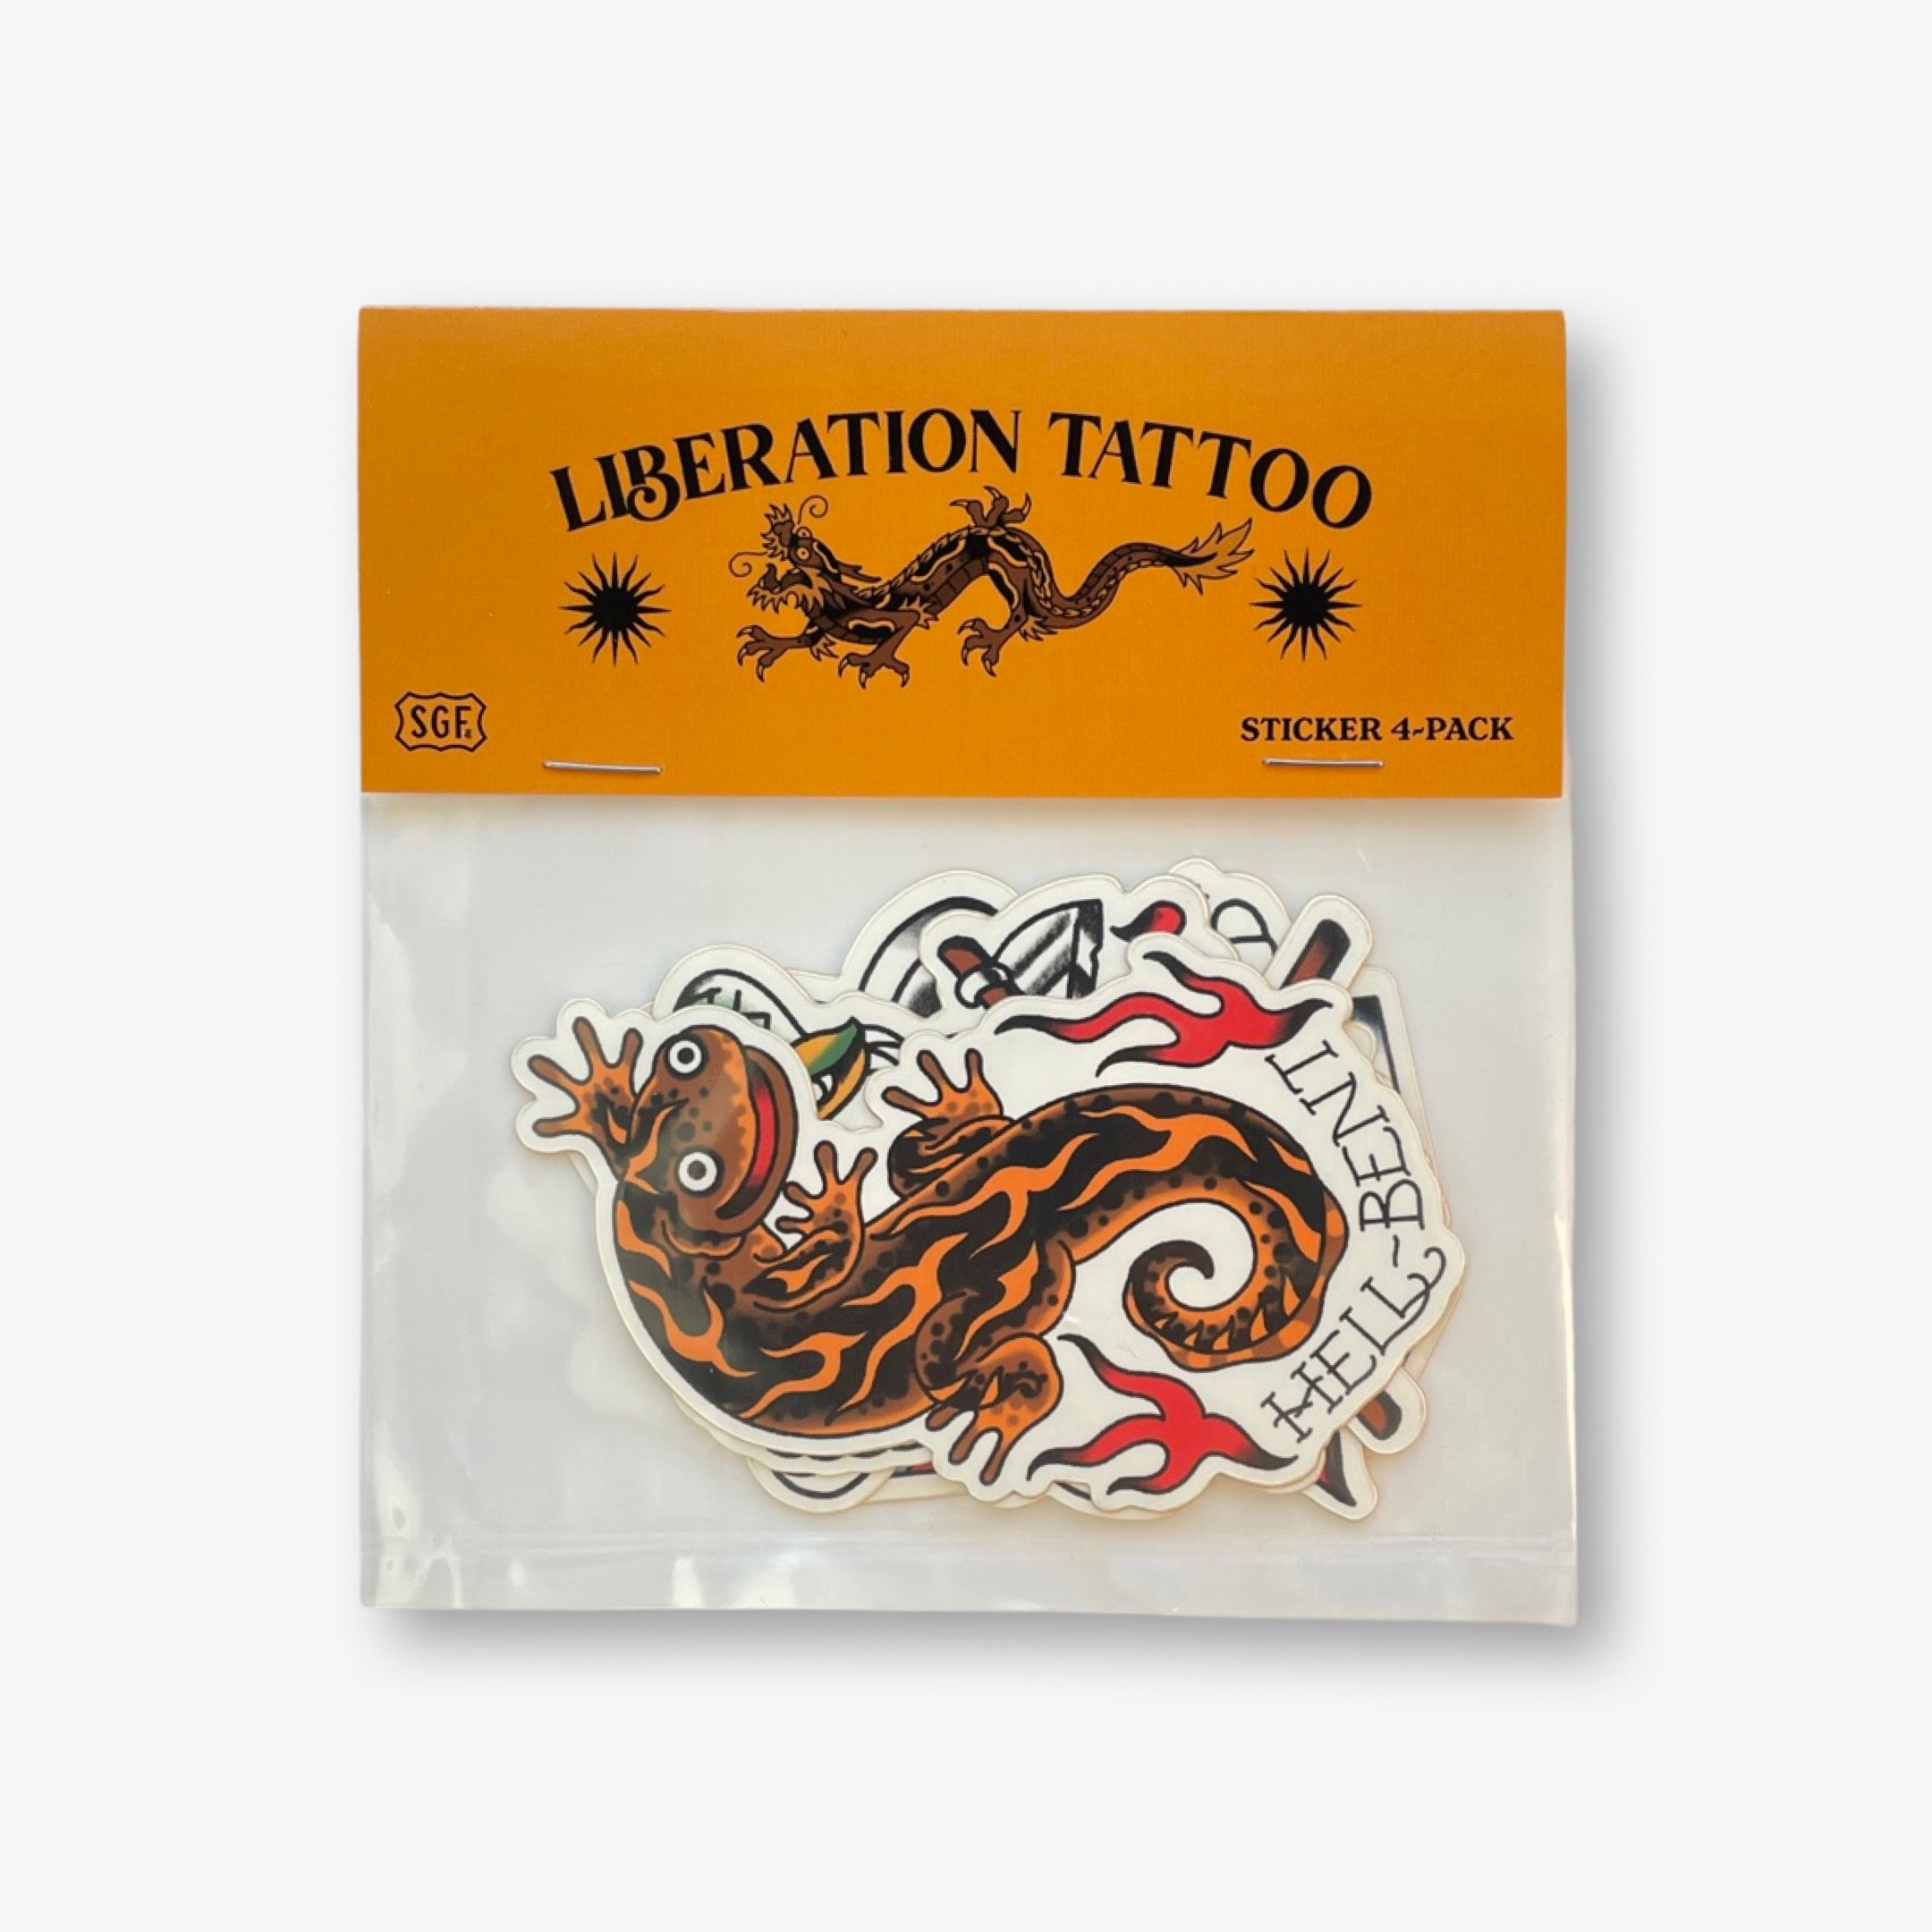 3D Temporary Tattoo Sticker Beautiful Black Color Tribal Totem Dragon  Popular Design Size 19x9 CM - 1PC. : Amazon.in: Beauty